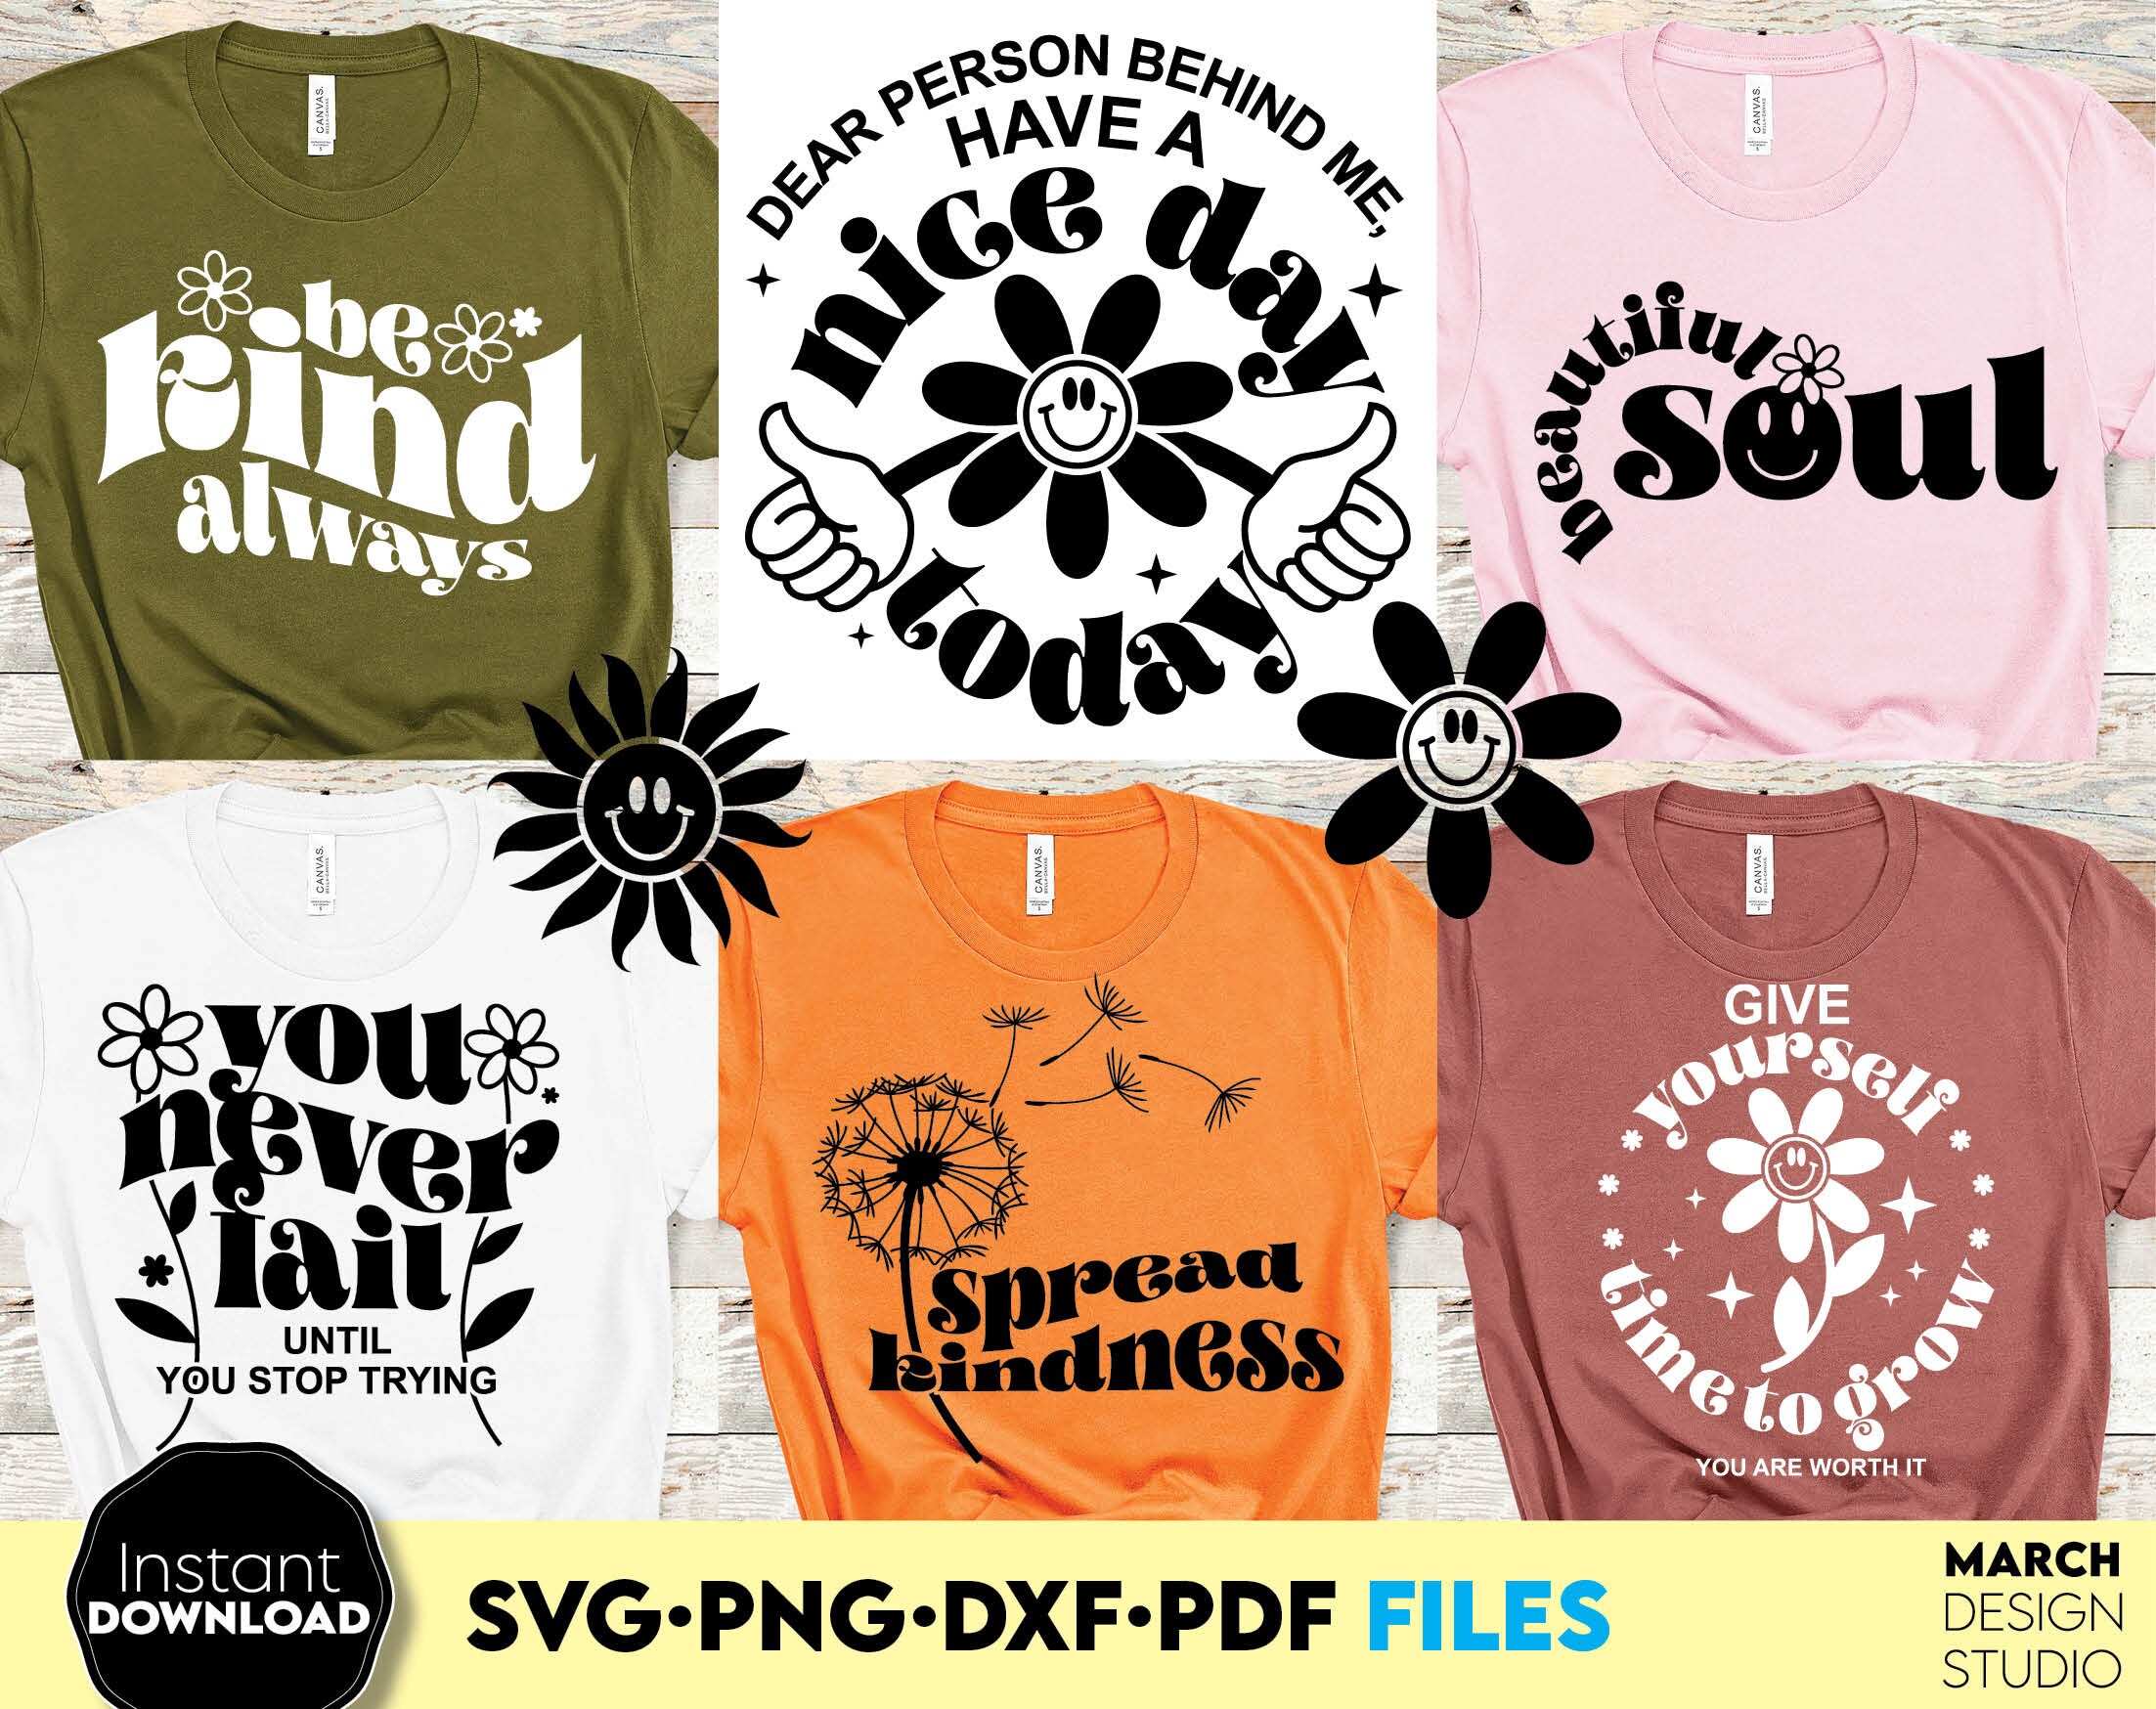 T-shirt Printer Svg, T-shirt Printing Svg, Print On Demand S - Inspire  Uplift